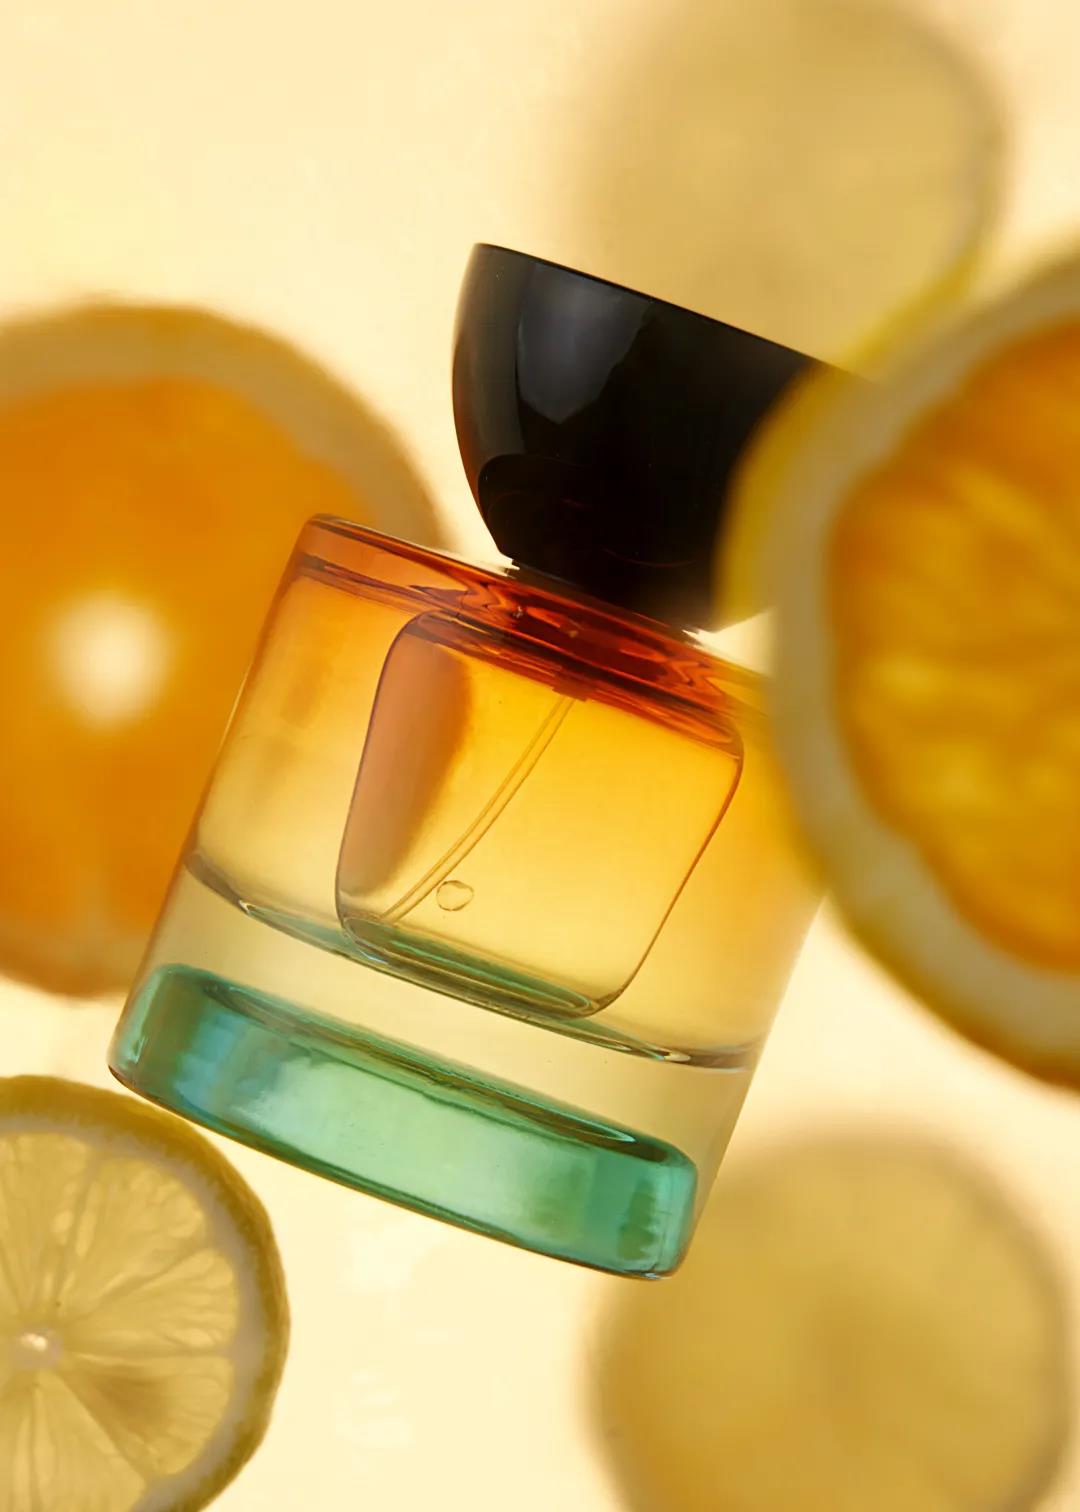 2022 Trend Alert: Colorful perfume bottles